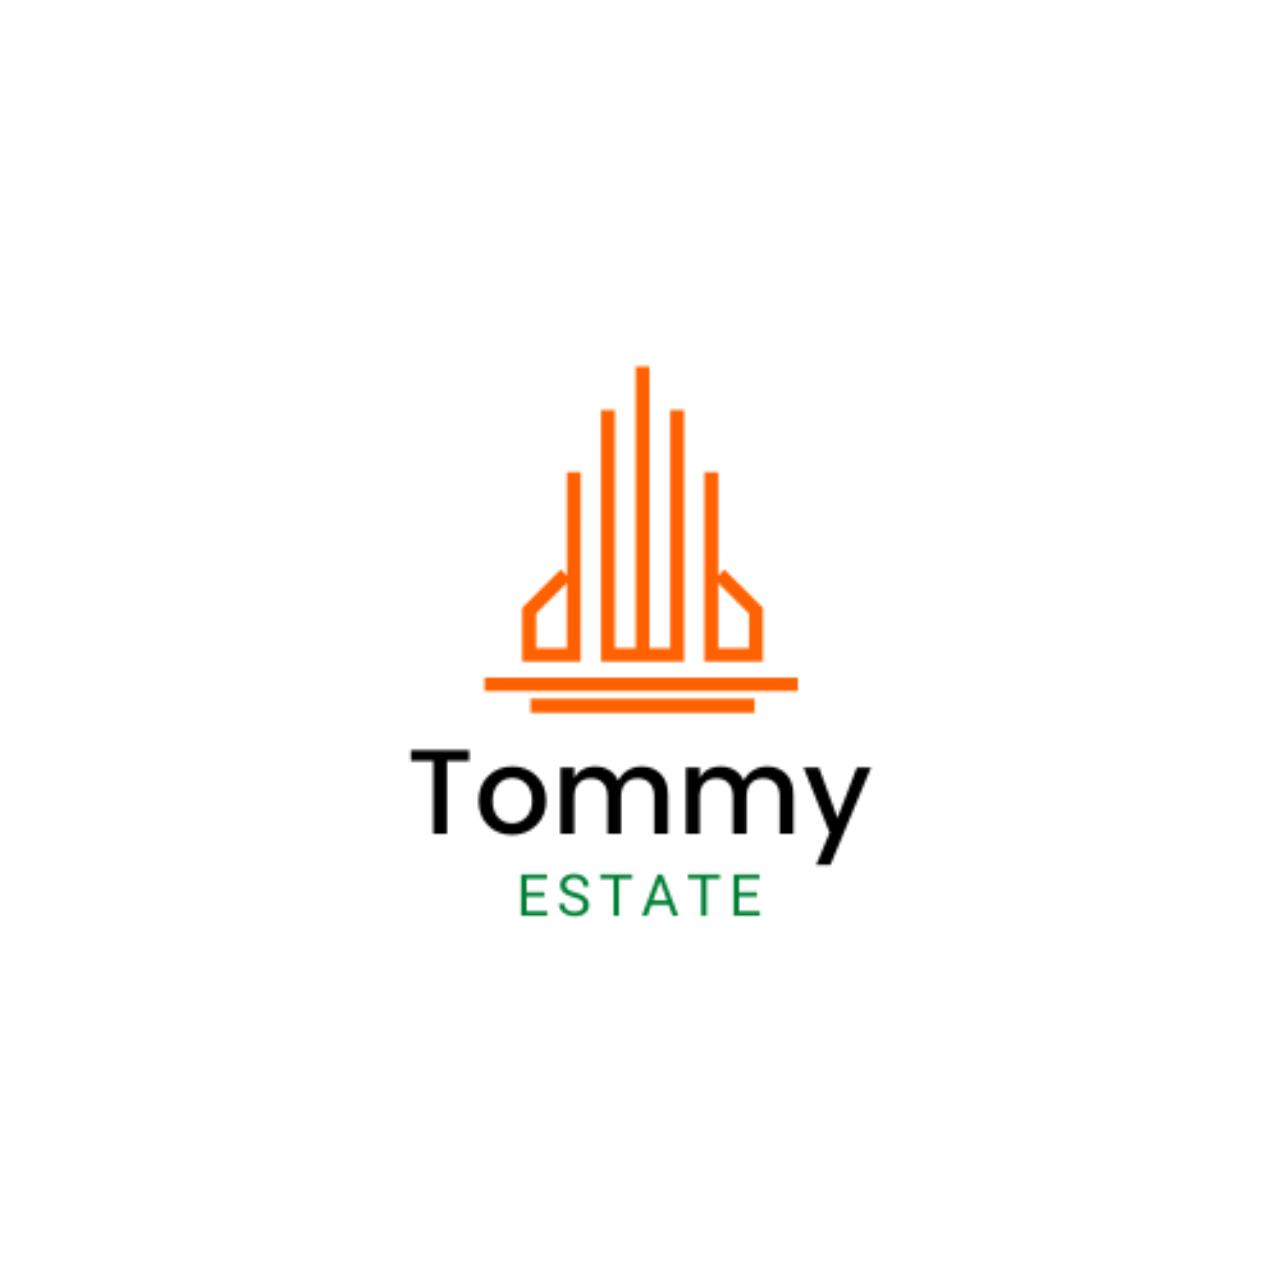 Tommy Estate logo